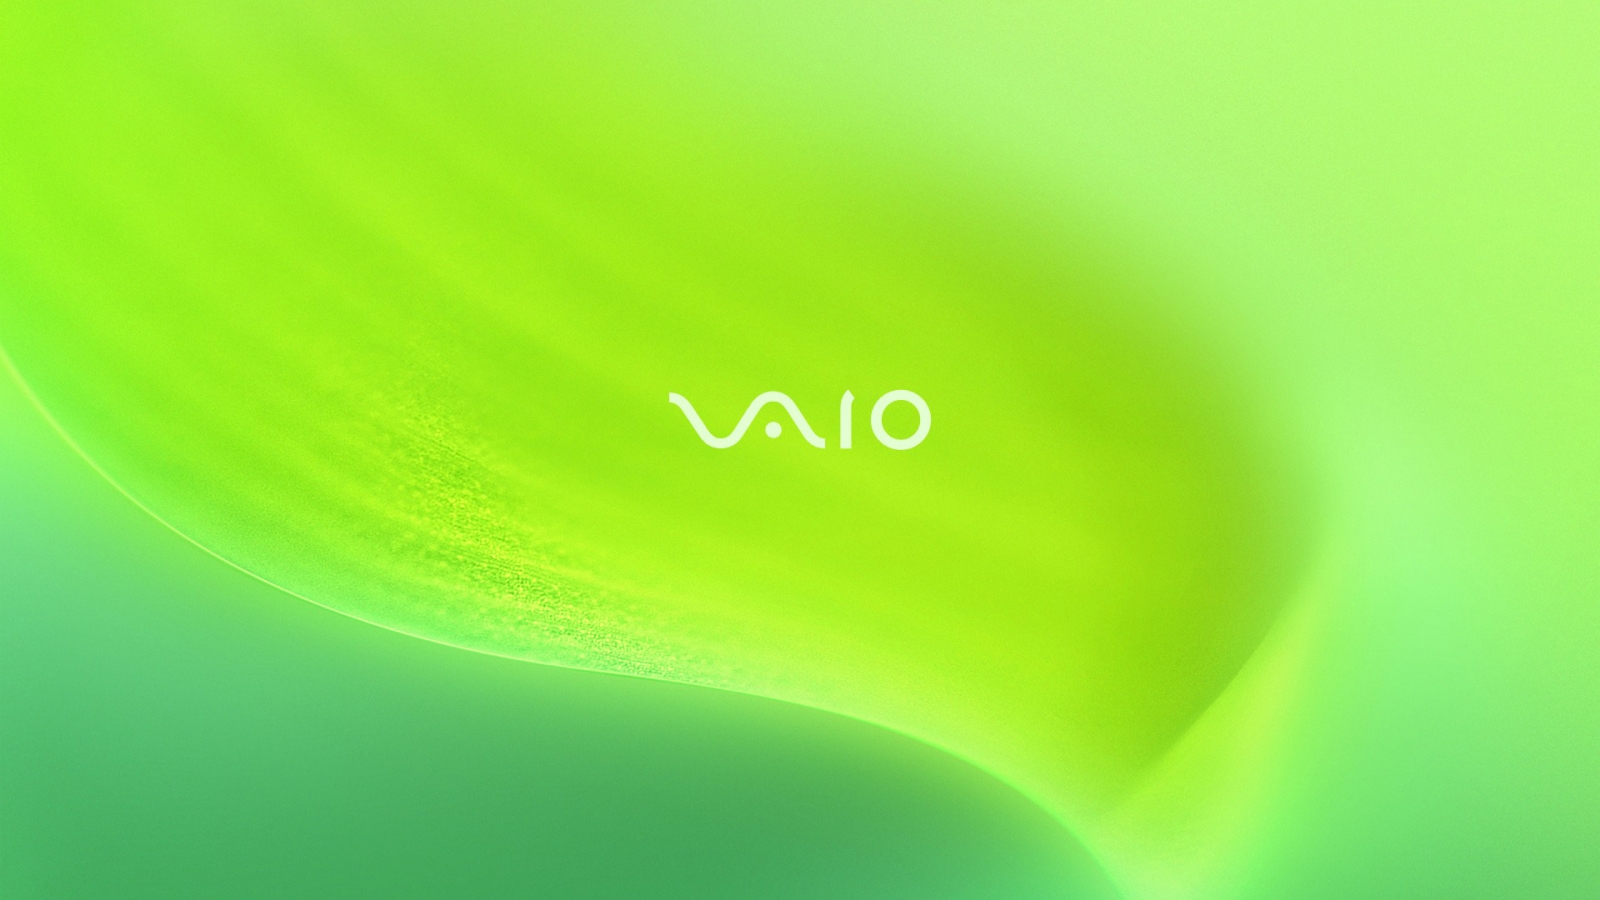 Vaio Green Leaf for 1600 x 900 HDTV resolution